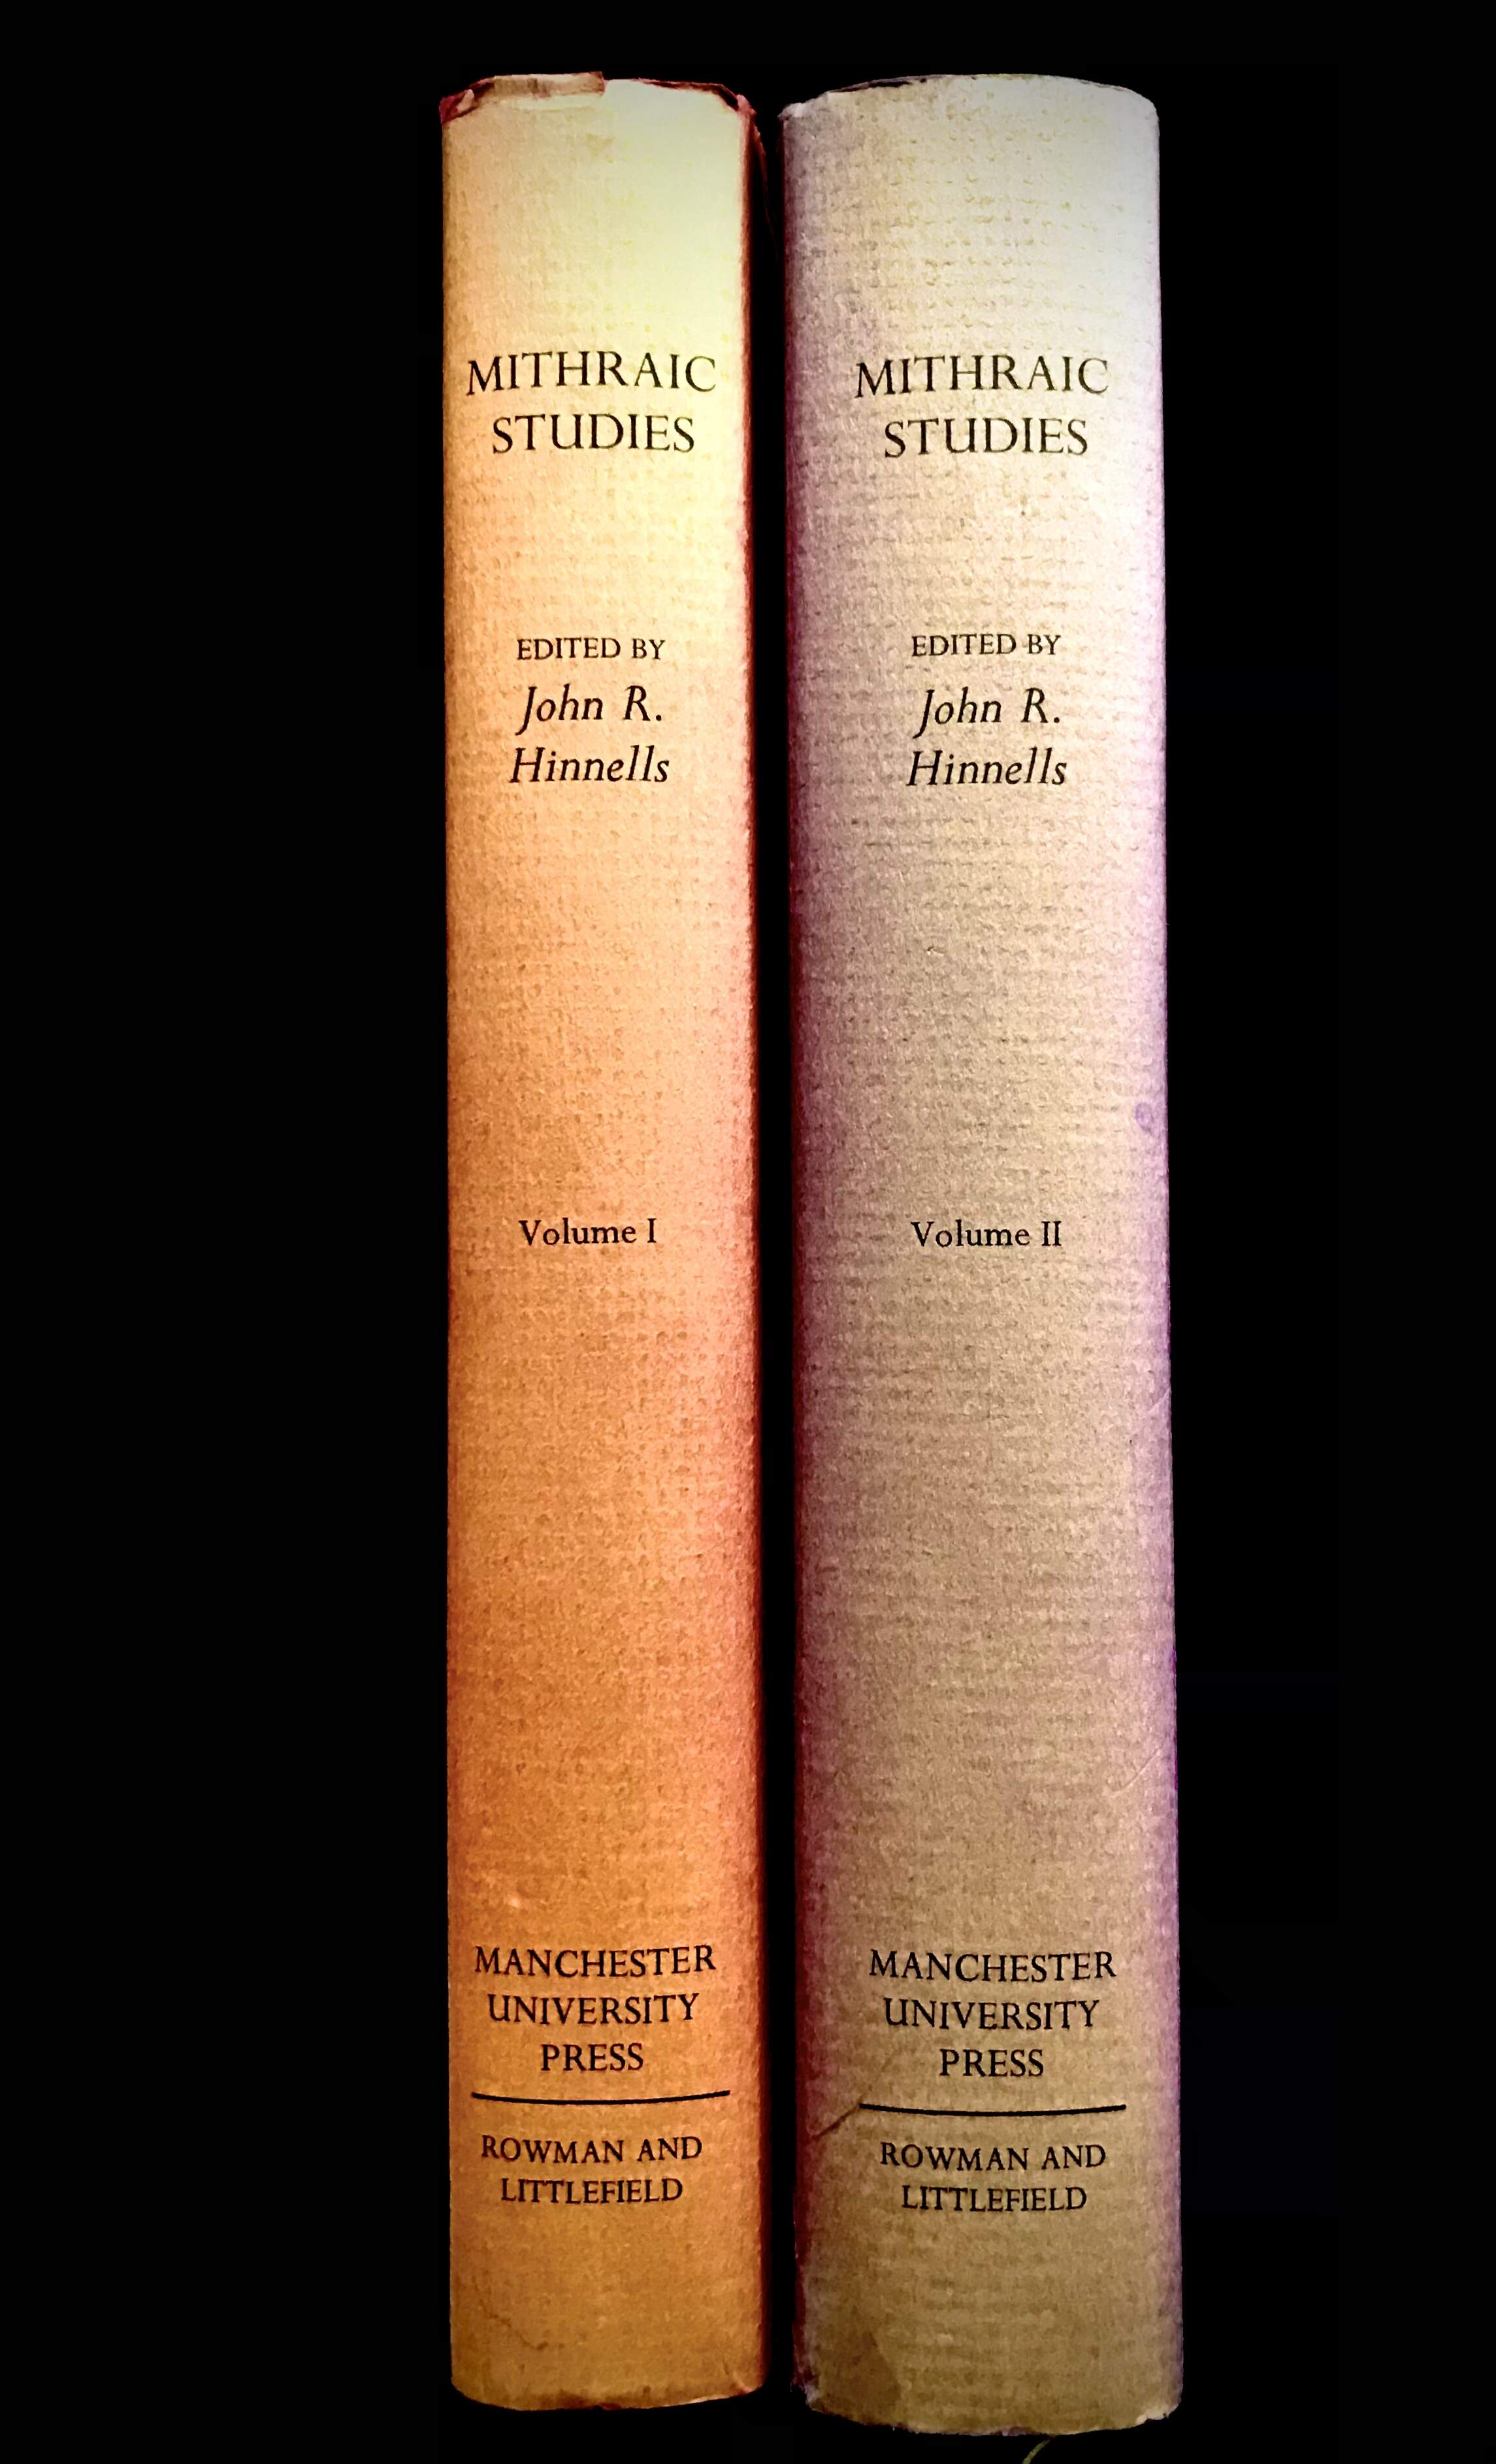 Mithraic Studies 2 Volumes Edited by John R. Hinnells